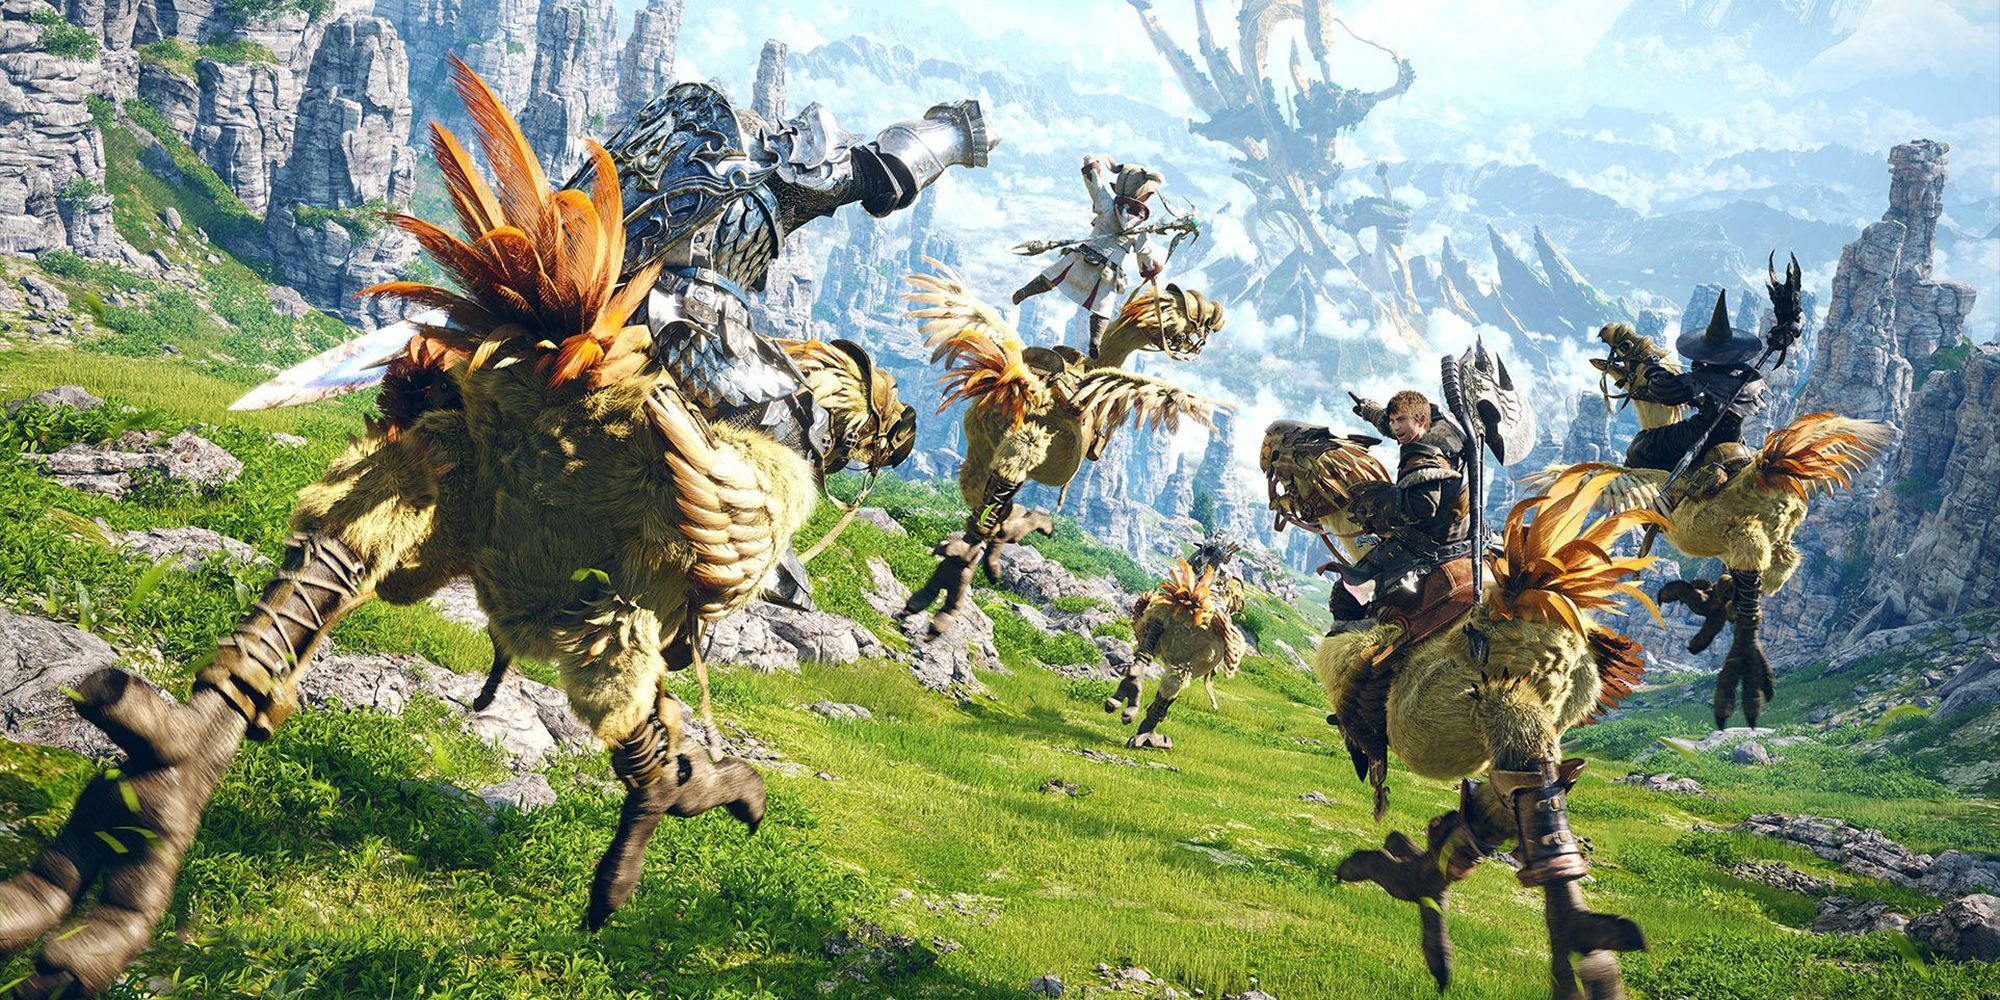 Final Fantasy XIV characters riding Chocobos through grassy field.